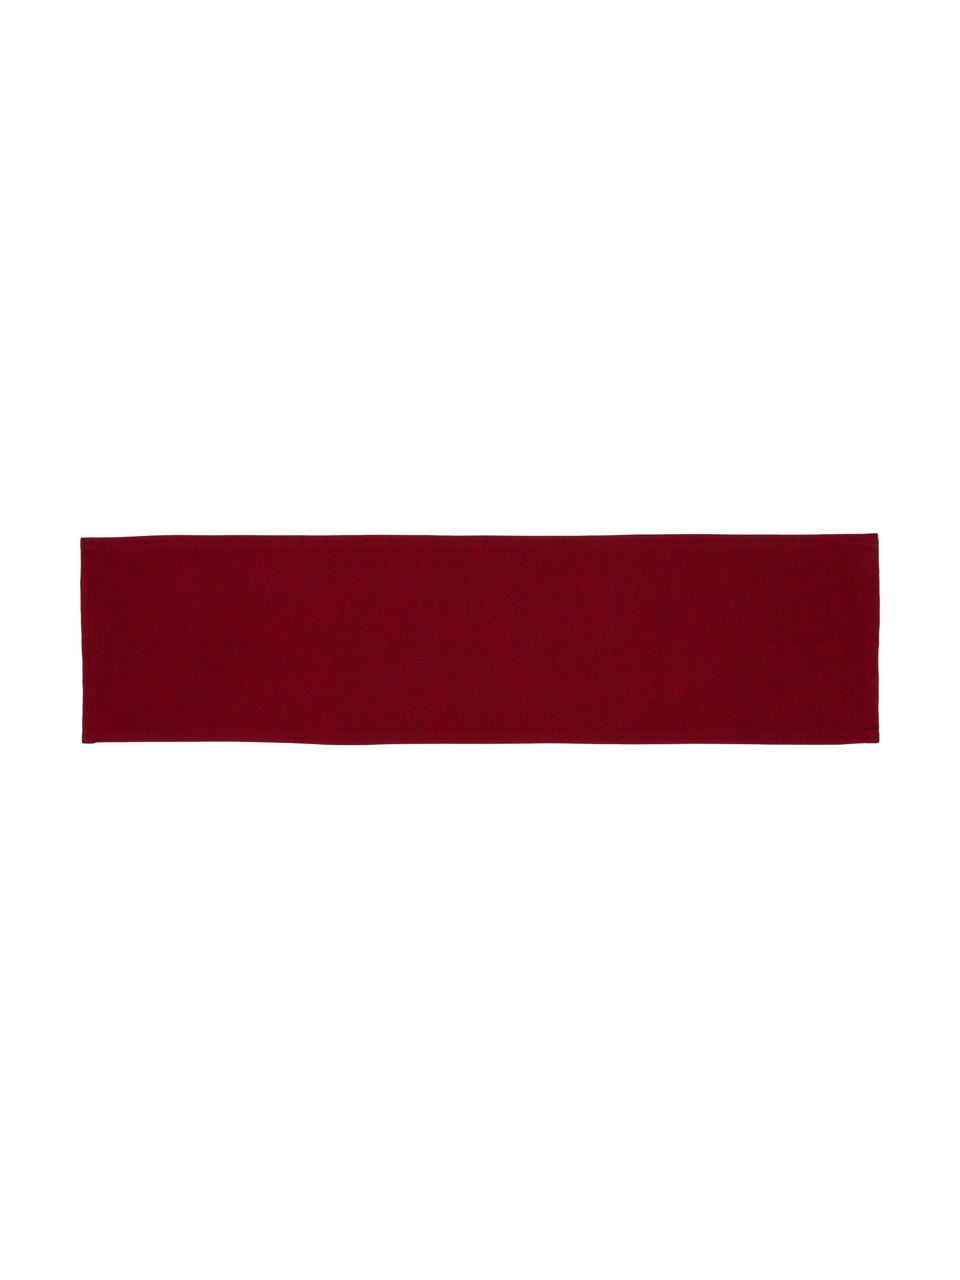 Chemin de table rouge Riva, 55 % coton, 45 % polyester, Rouge, larg. 40 x long. 150 cm